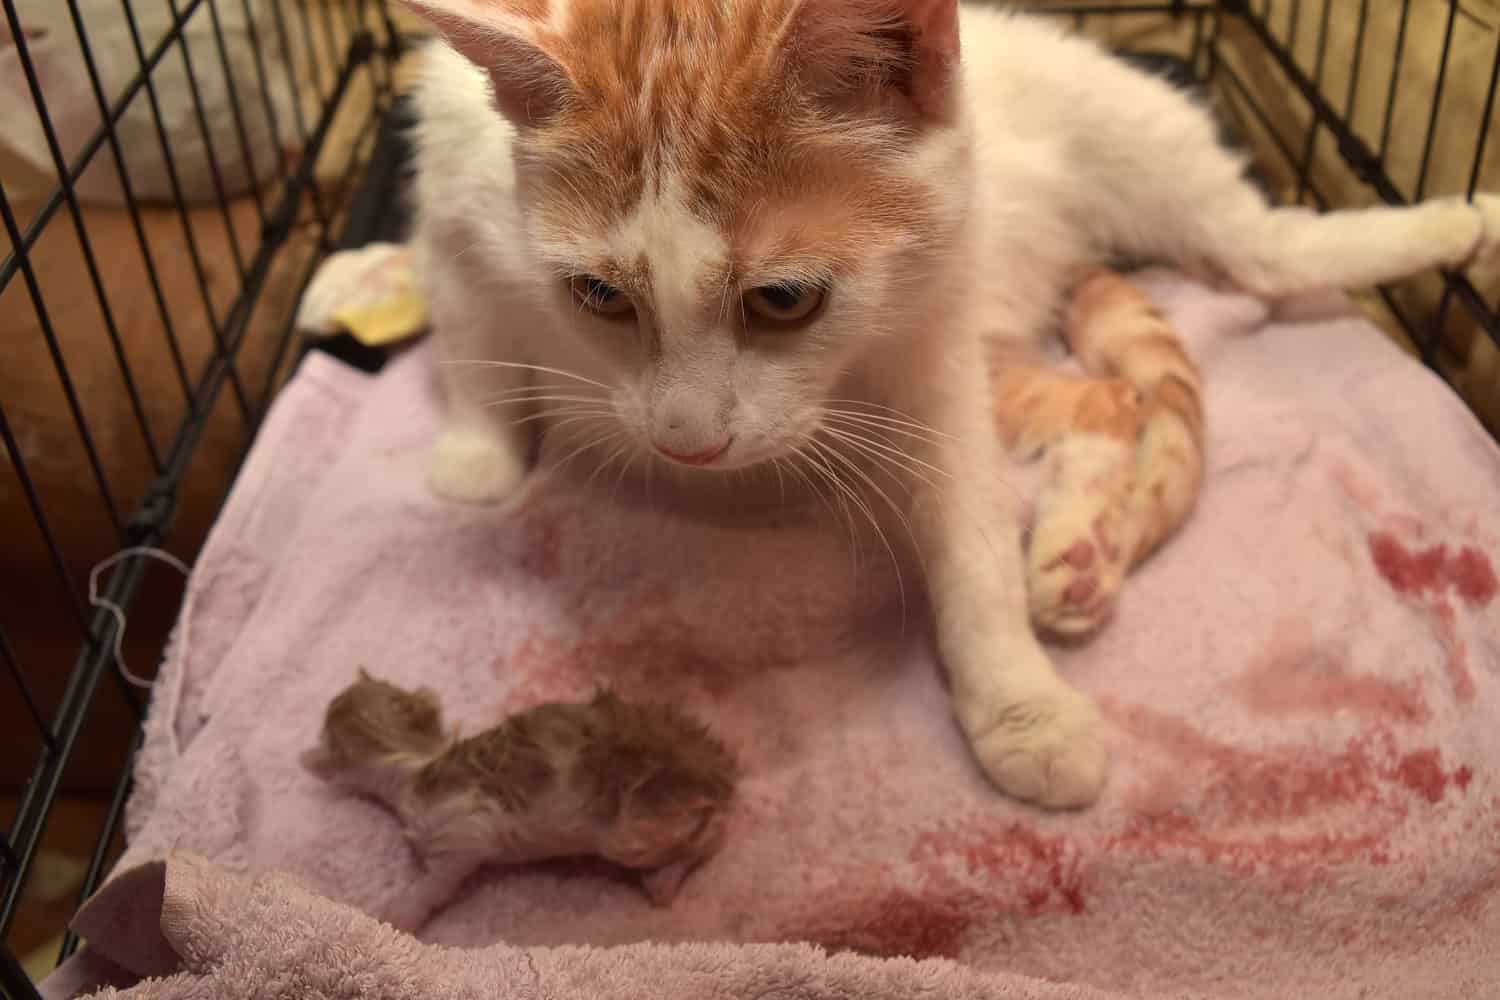 female feline cat give birth
